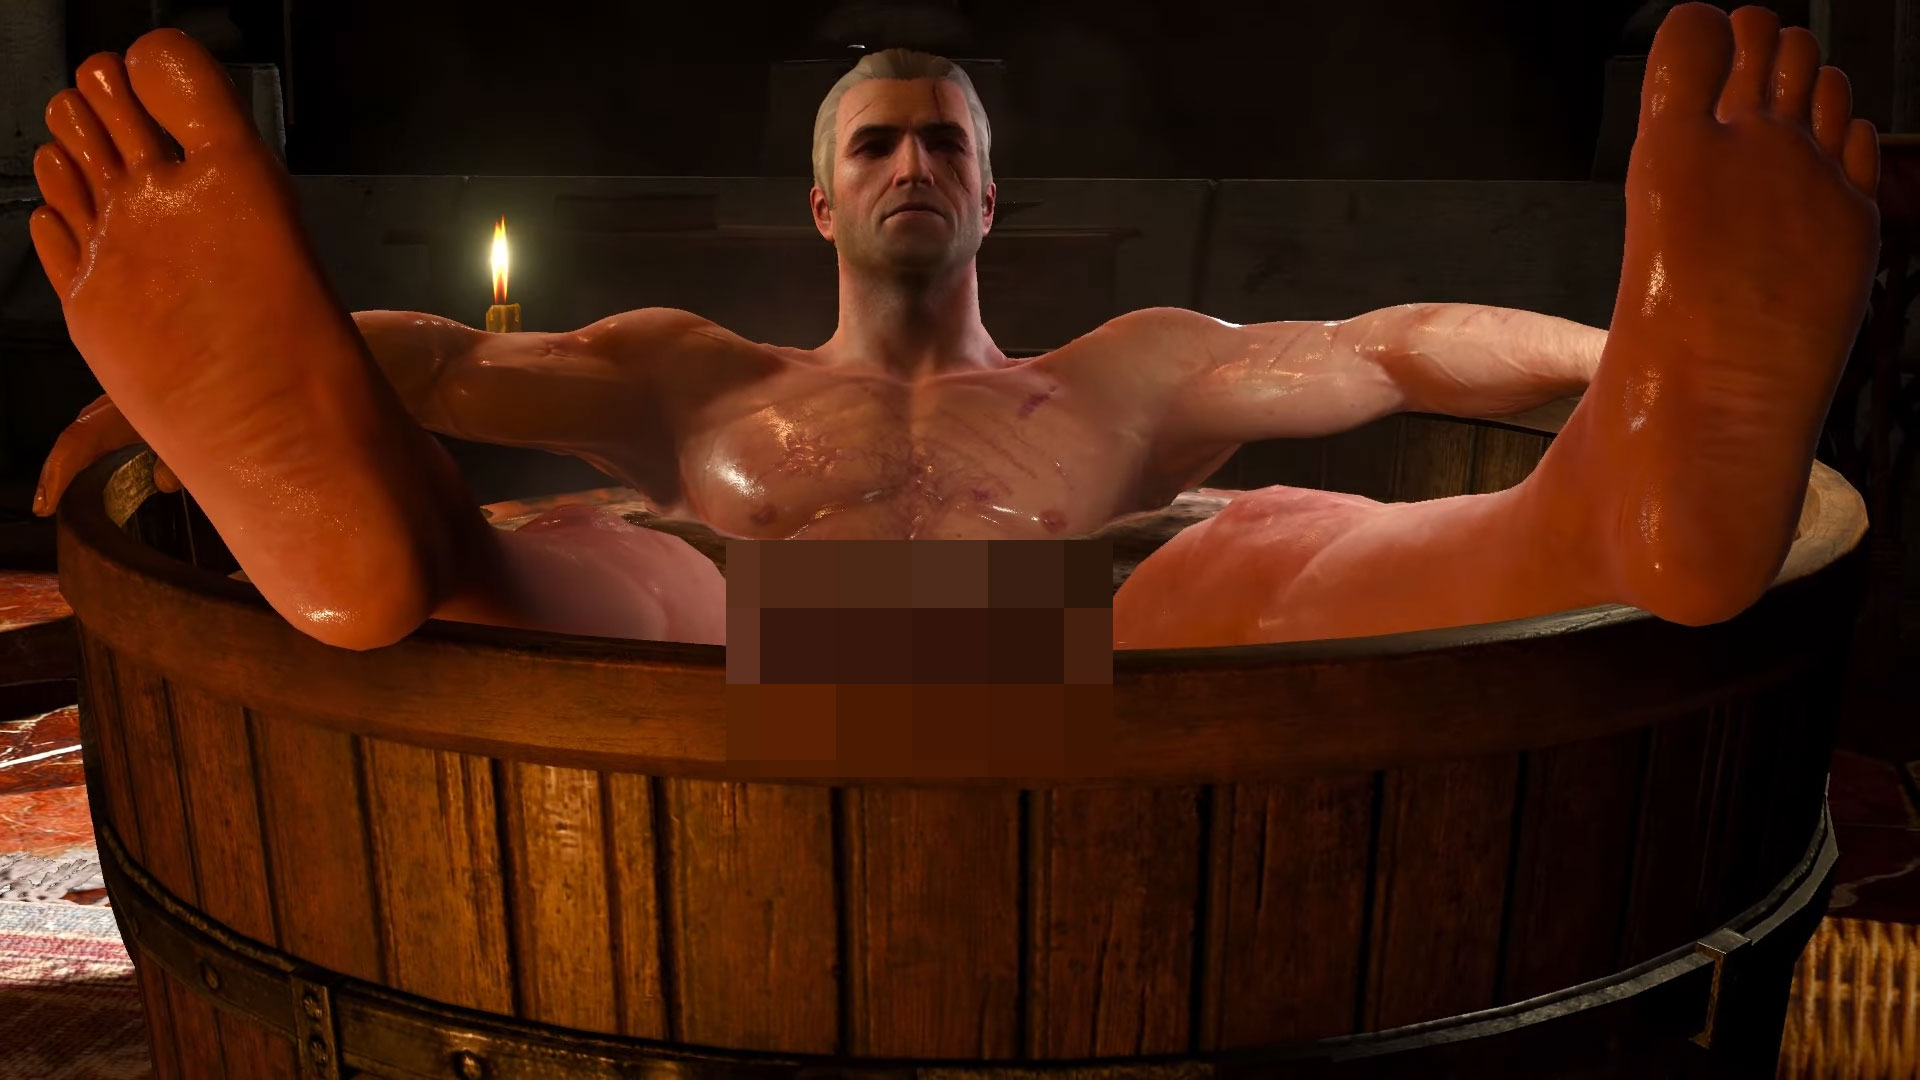 The Witcher 3 devs debated if Geralt bath scene should go 'whole hog'